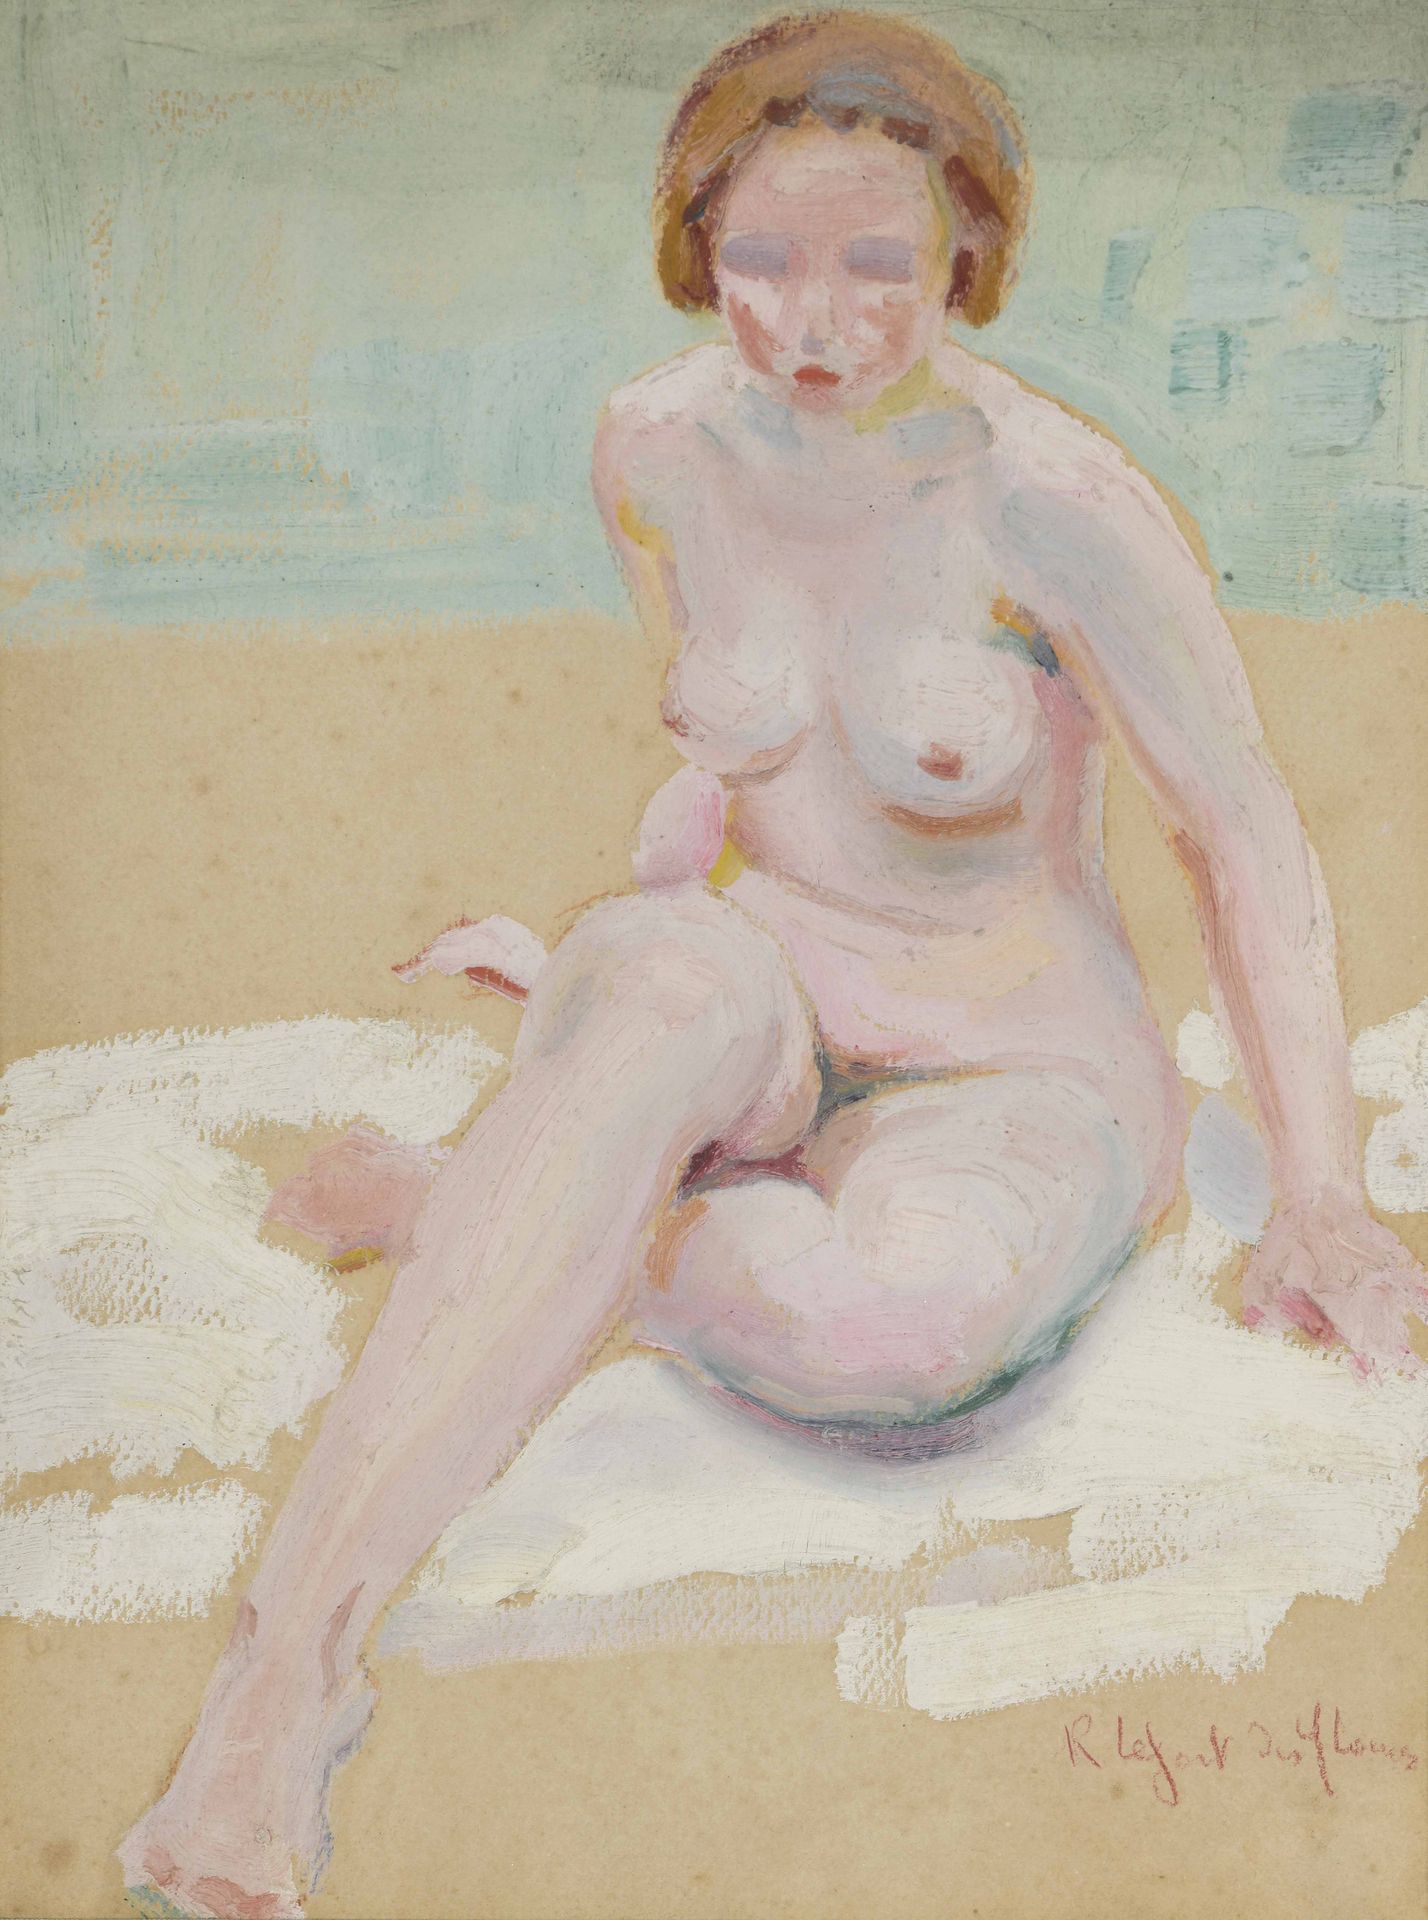 Null 罗伯特-勒弗特-德-伊卢斯(1892-1979)
坐着洗澡的人
纸上油画，右下方有签名。
30 x 22,5 cm